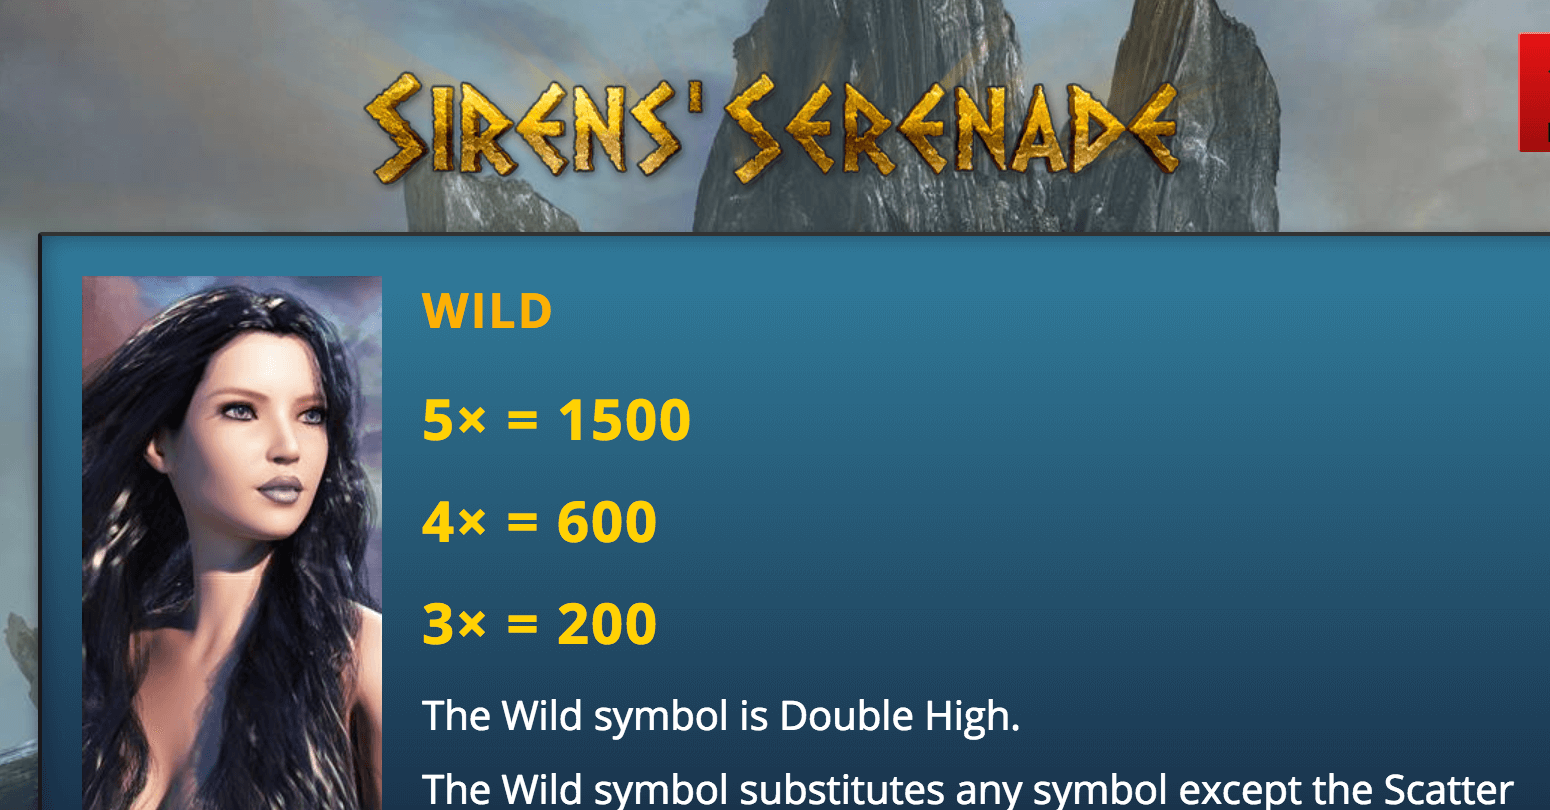 Sirens Serenade Slot Bonus